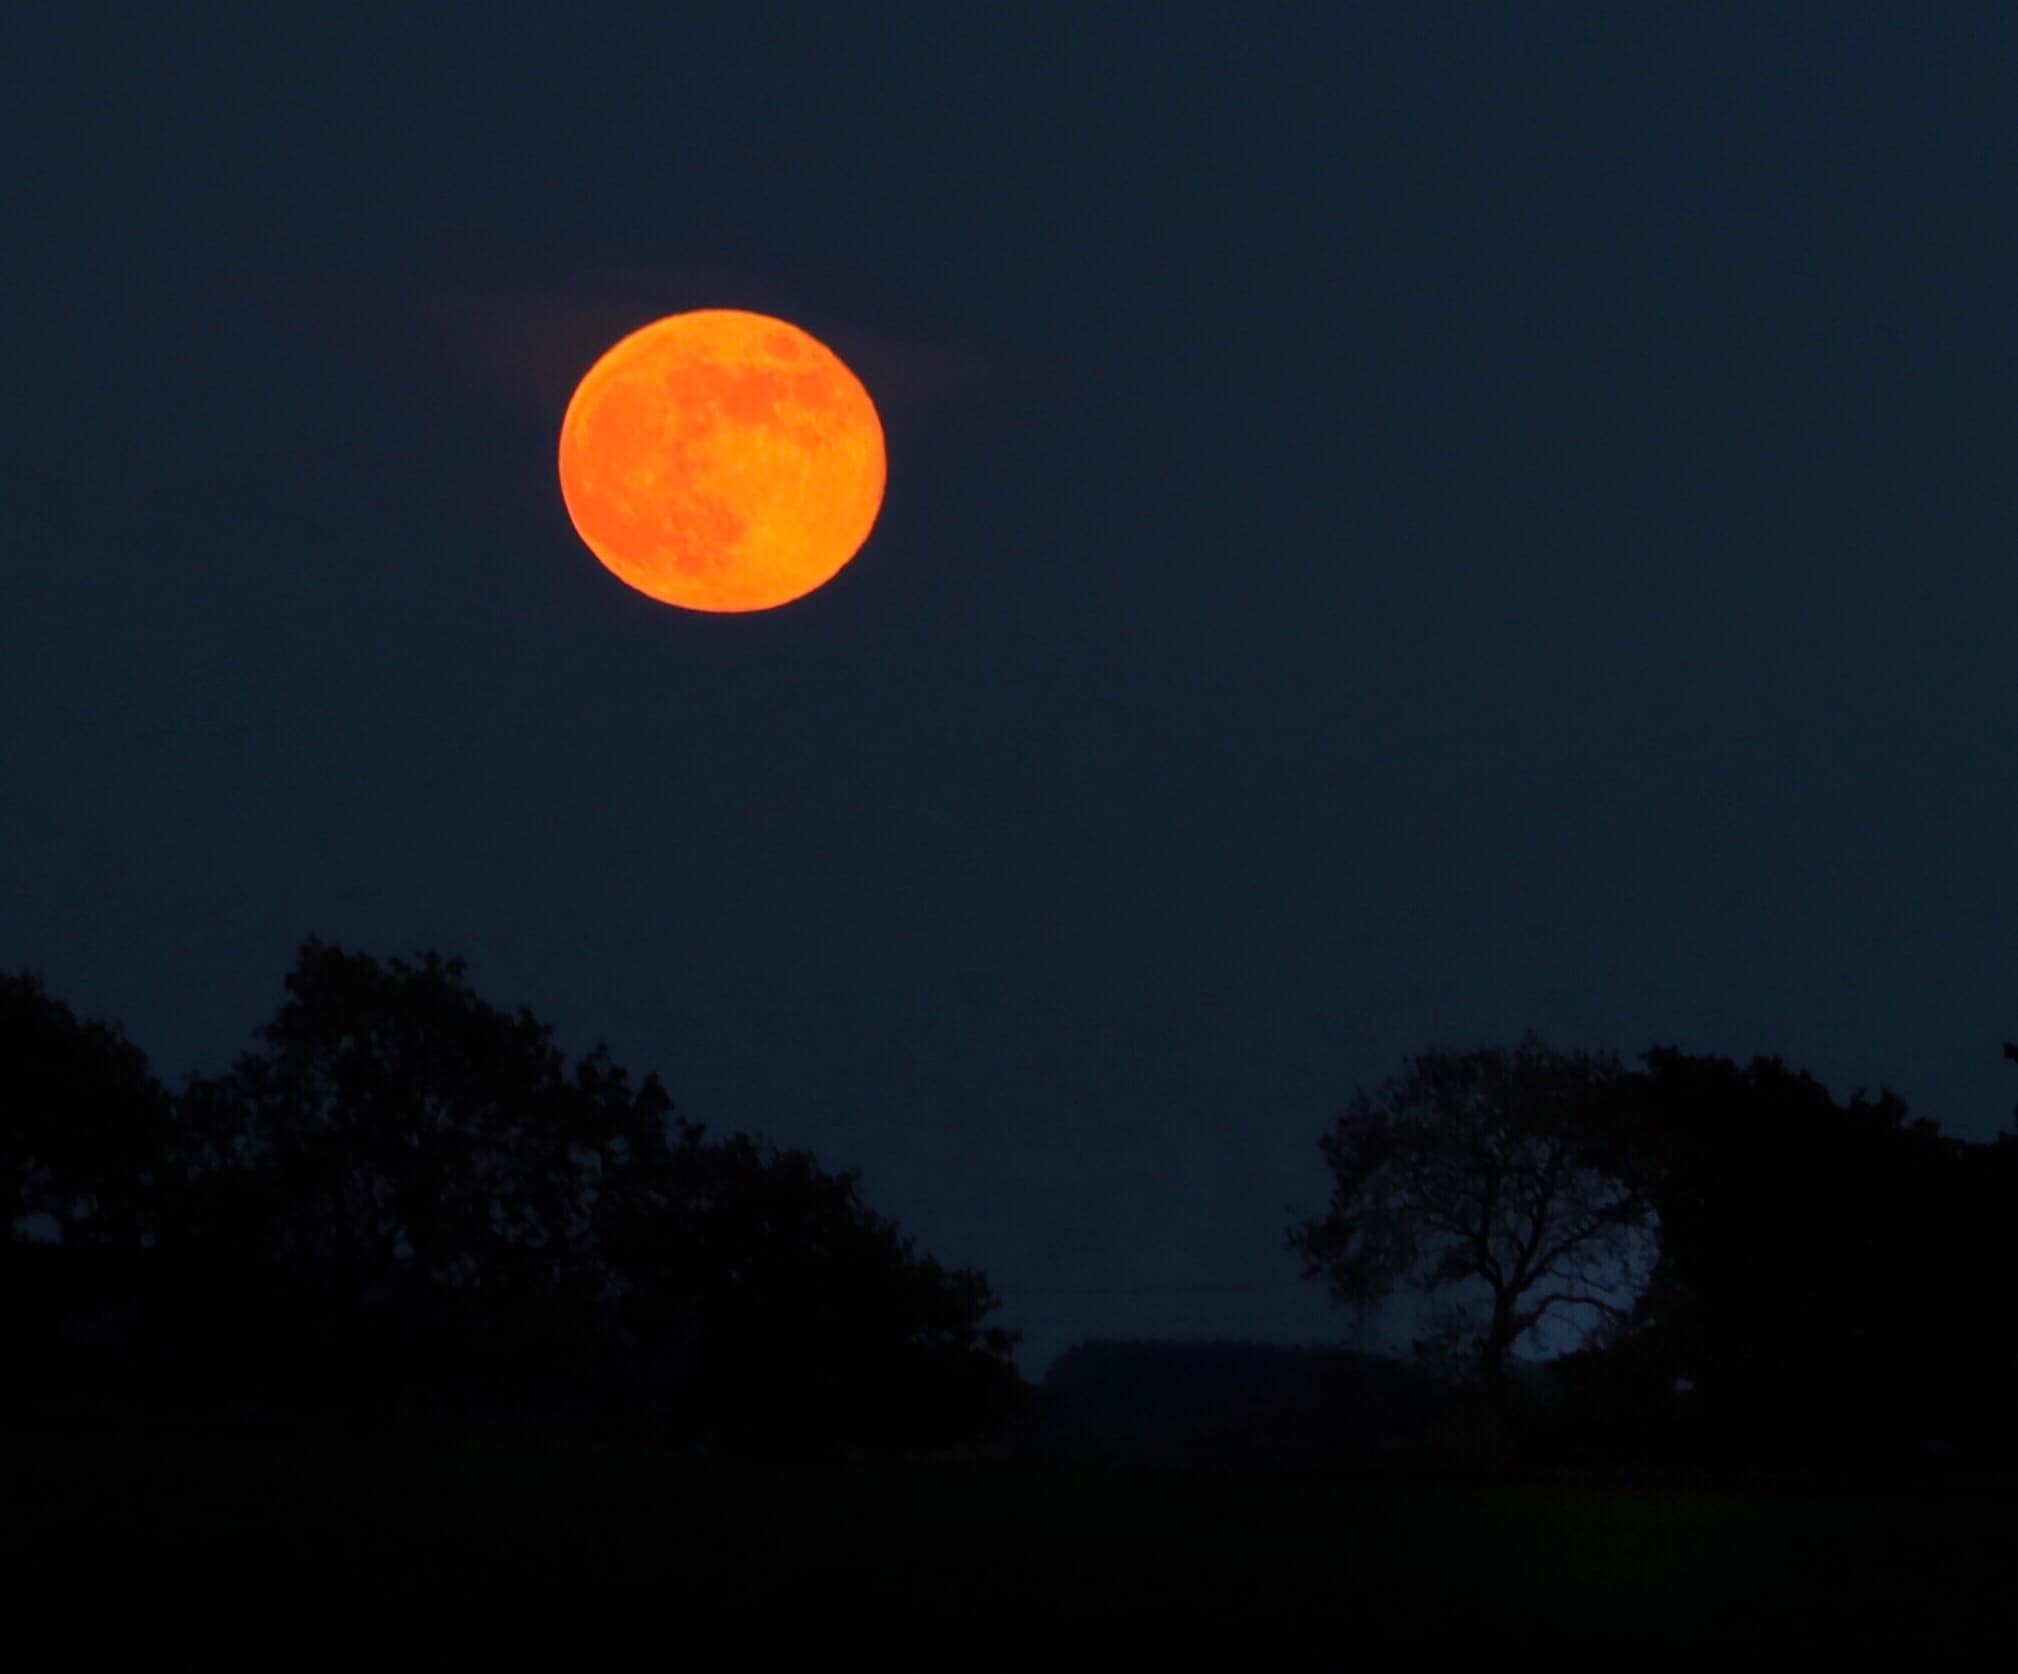 Lana Huntleys photo of the flower moon last year on May 8